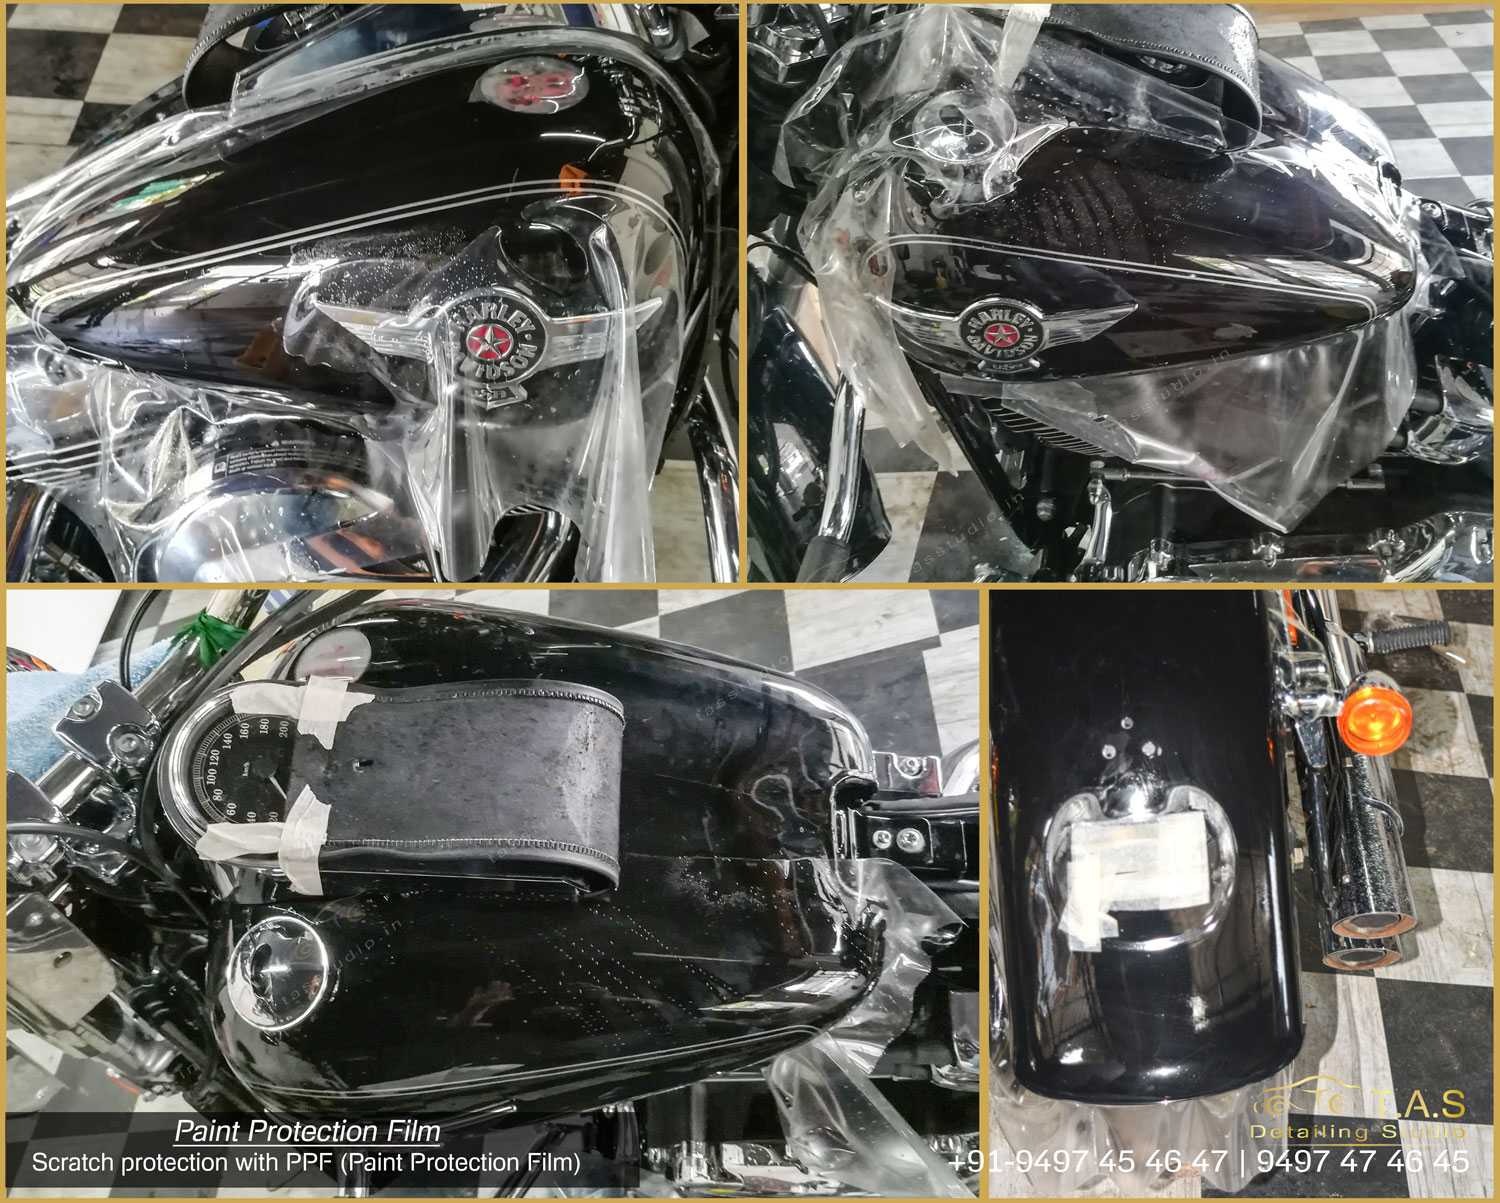 Harley-Davidson Fat Boy, Paint protection film, PPF at TAS, Travancore Auto Spa, Detailing Studio